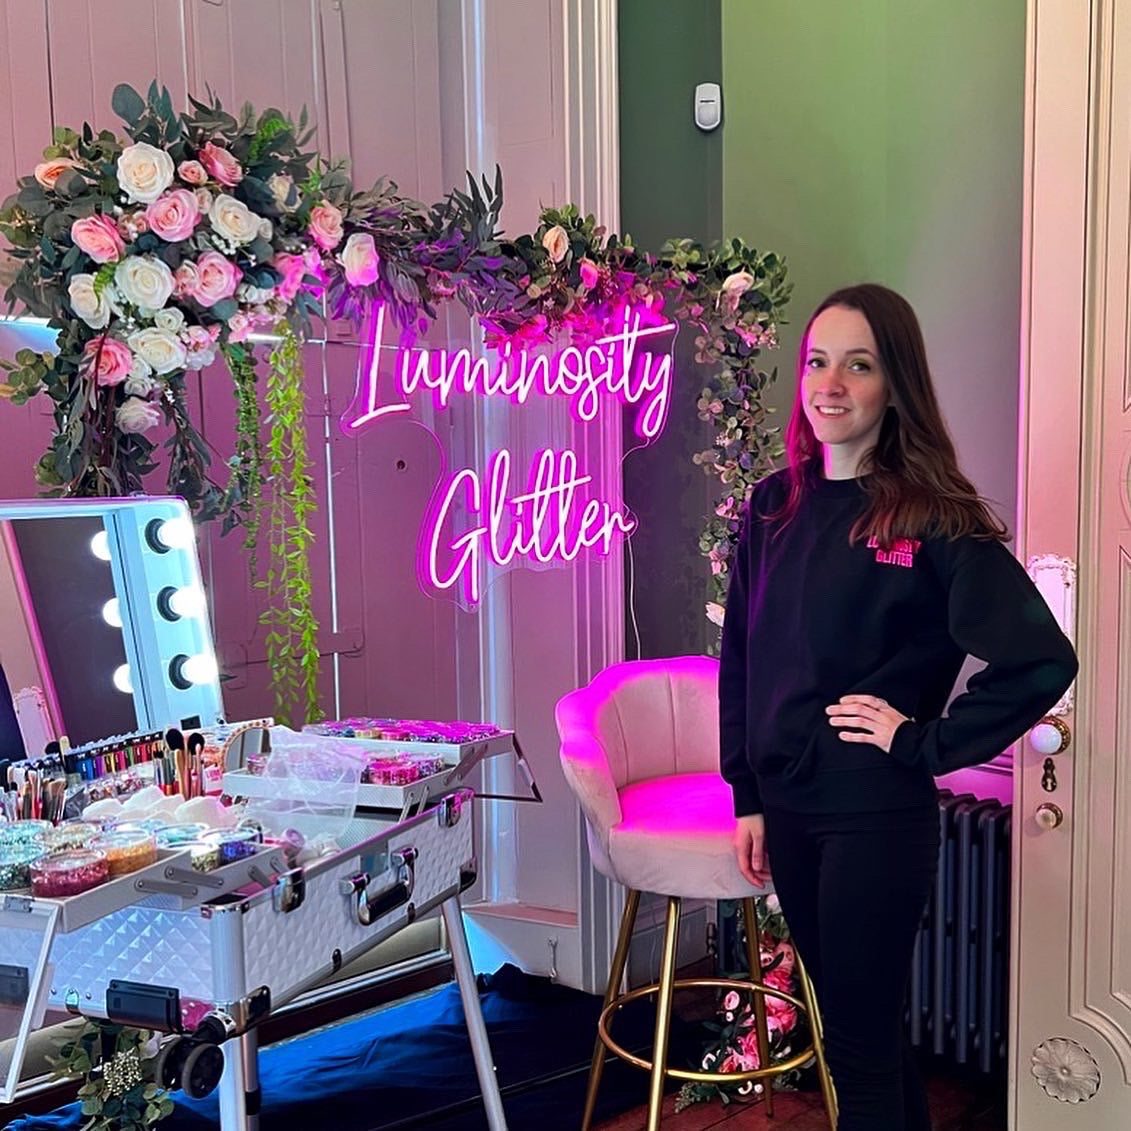 Daisy stood with Luminosity Glitter's luxury eco glitter bar at Gunnersbury Park wedding show.